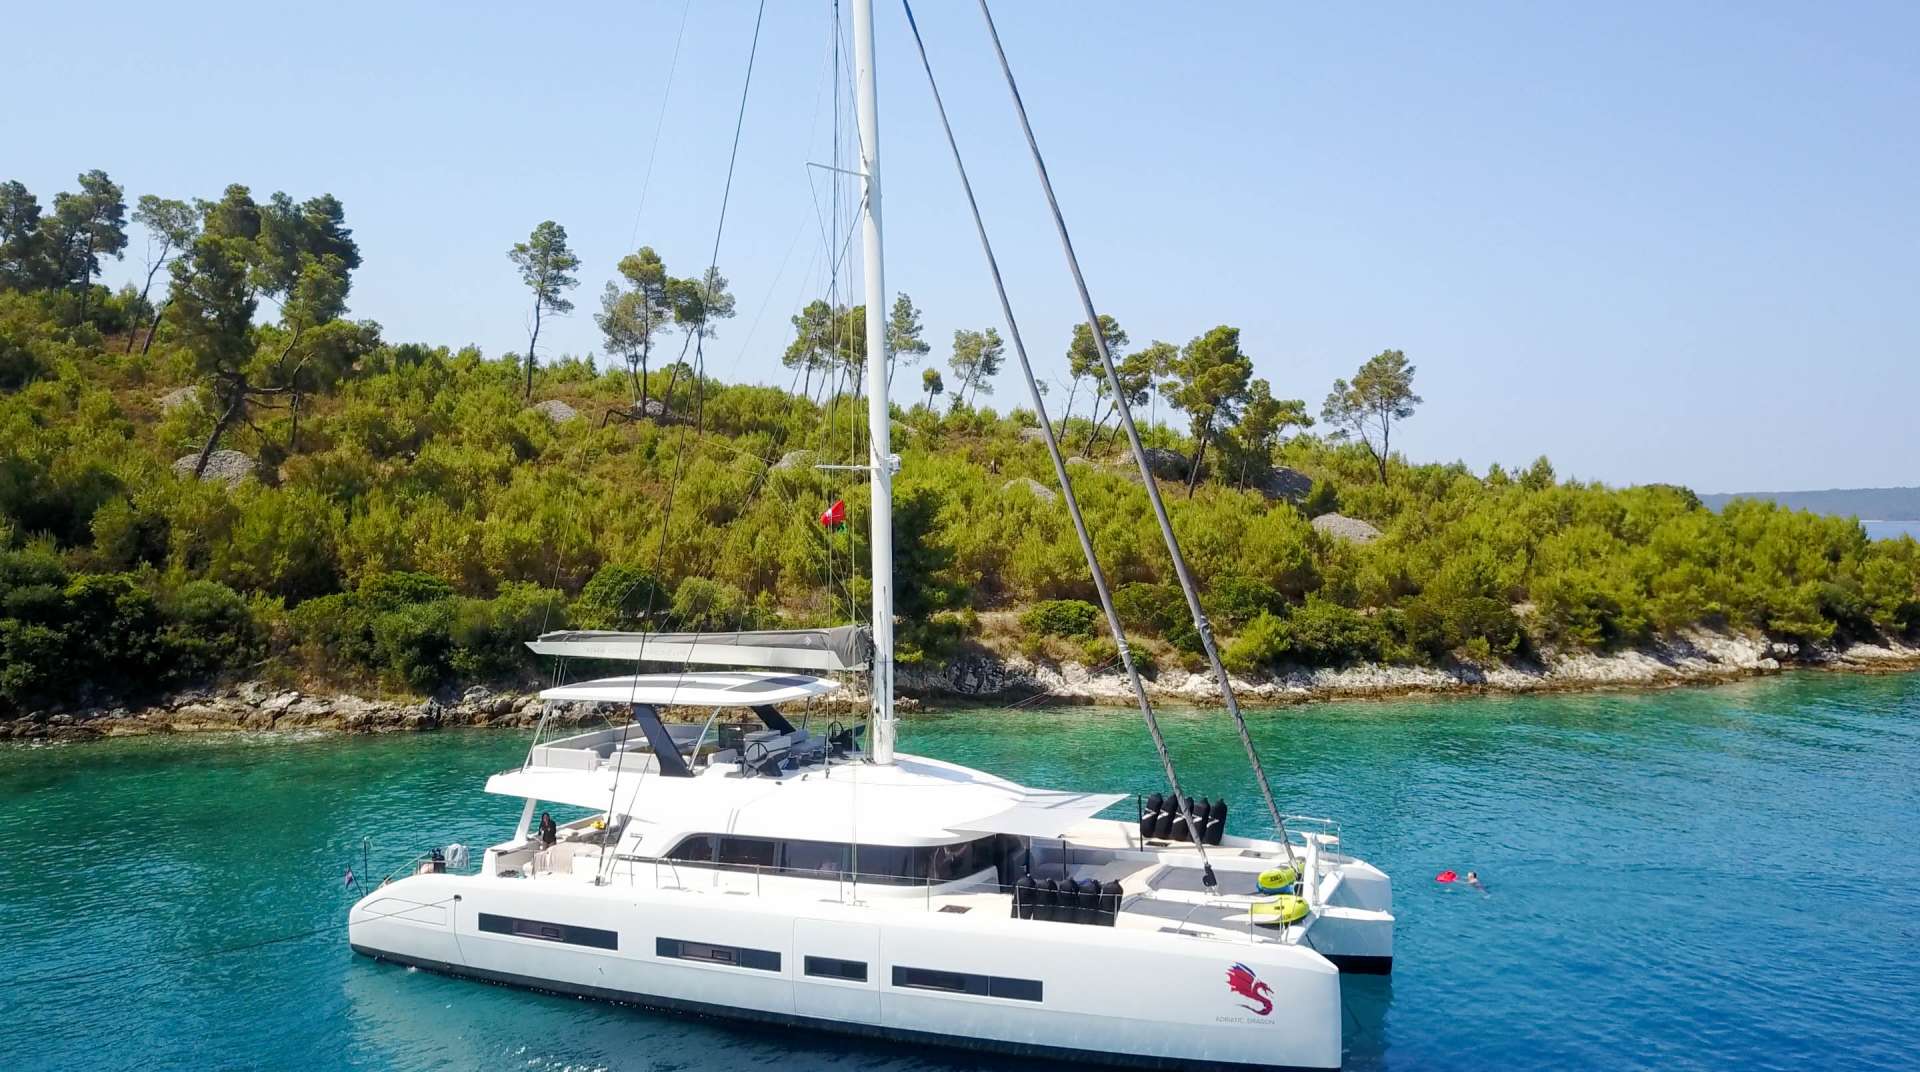 adriatic dragon (lagoon 77) - Yacht Charter Opatija & Boat hire in Croatia 1